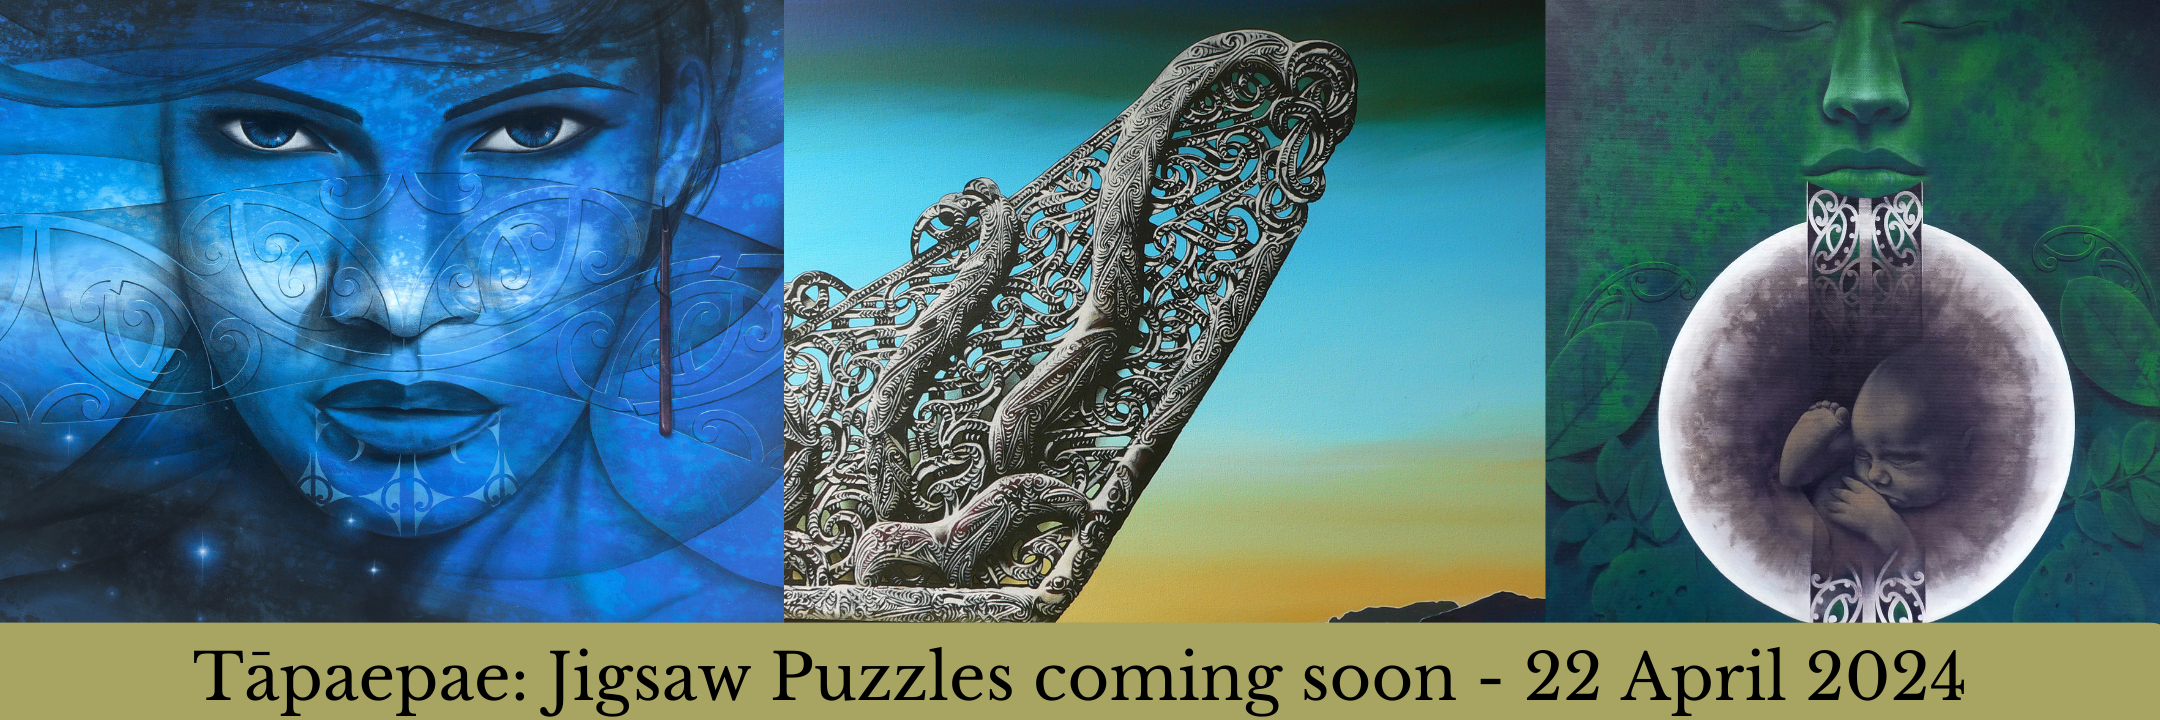 Tāpaepae | Jigsaw Puzzles - Coming Soon